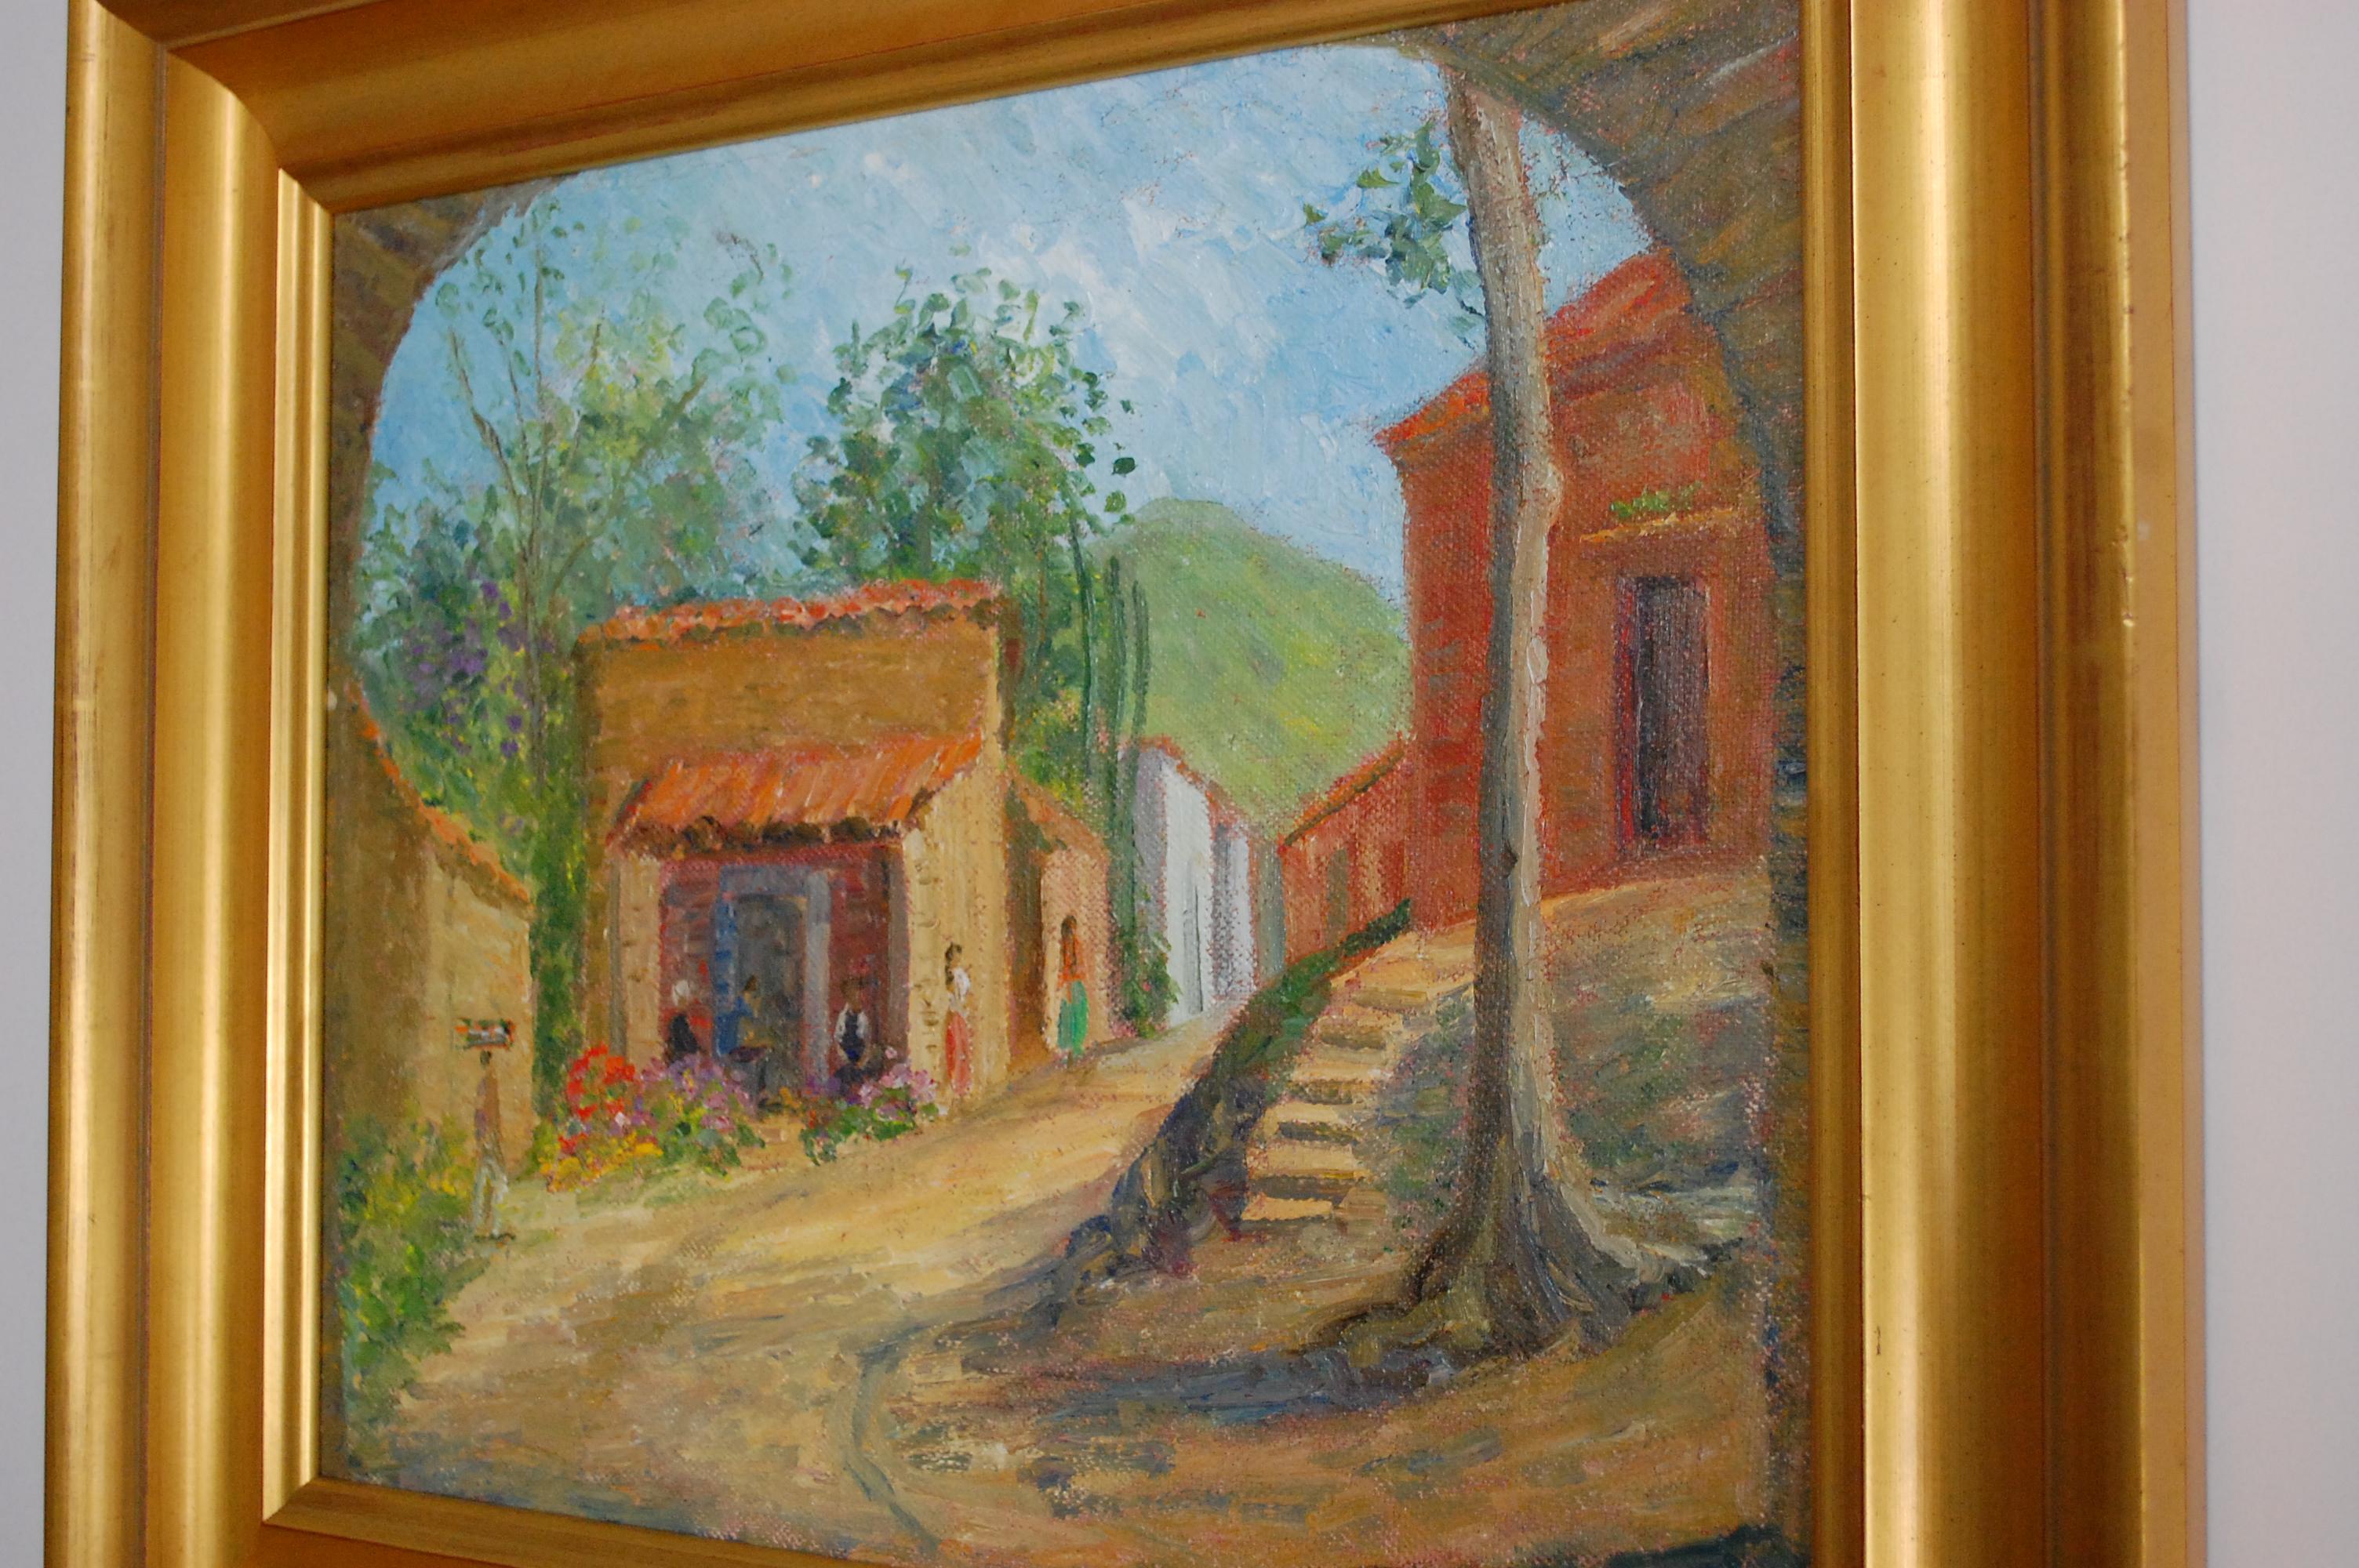  Village Scene Landscape - Impressionist Painting by Hildegarde Hamilton